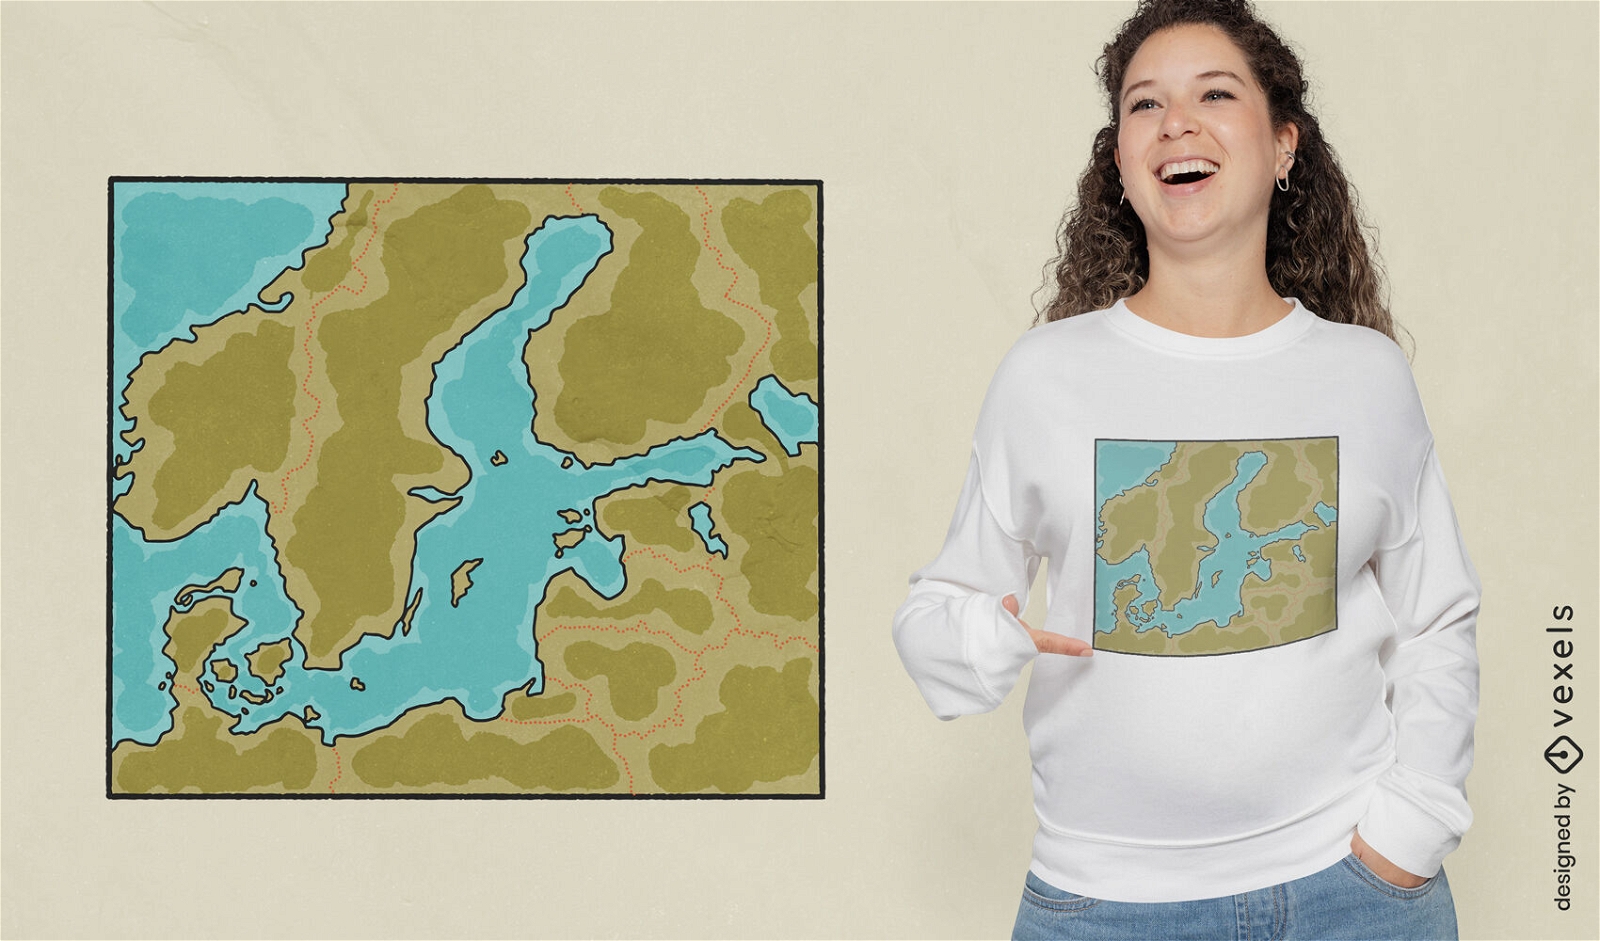 Baltic sea map t-shirt design